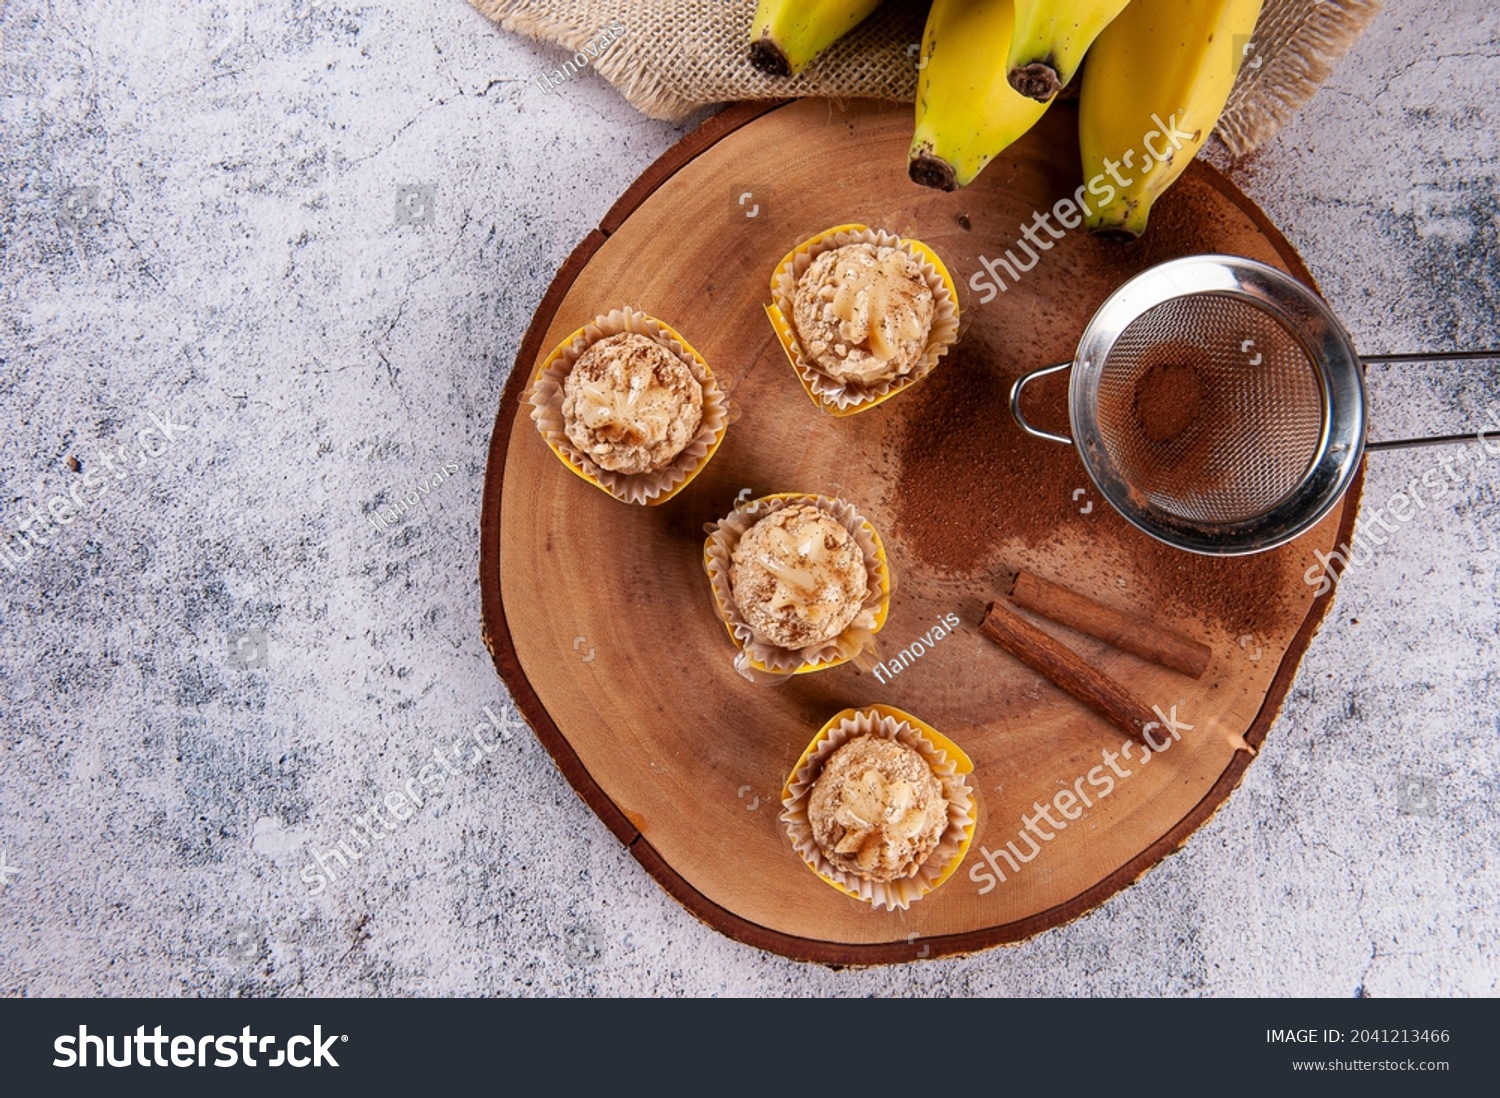 Banana and Cinnamon Gourmet Brigadeiro. Typical Brazilian sweet. #2041213466